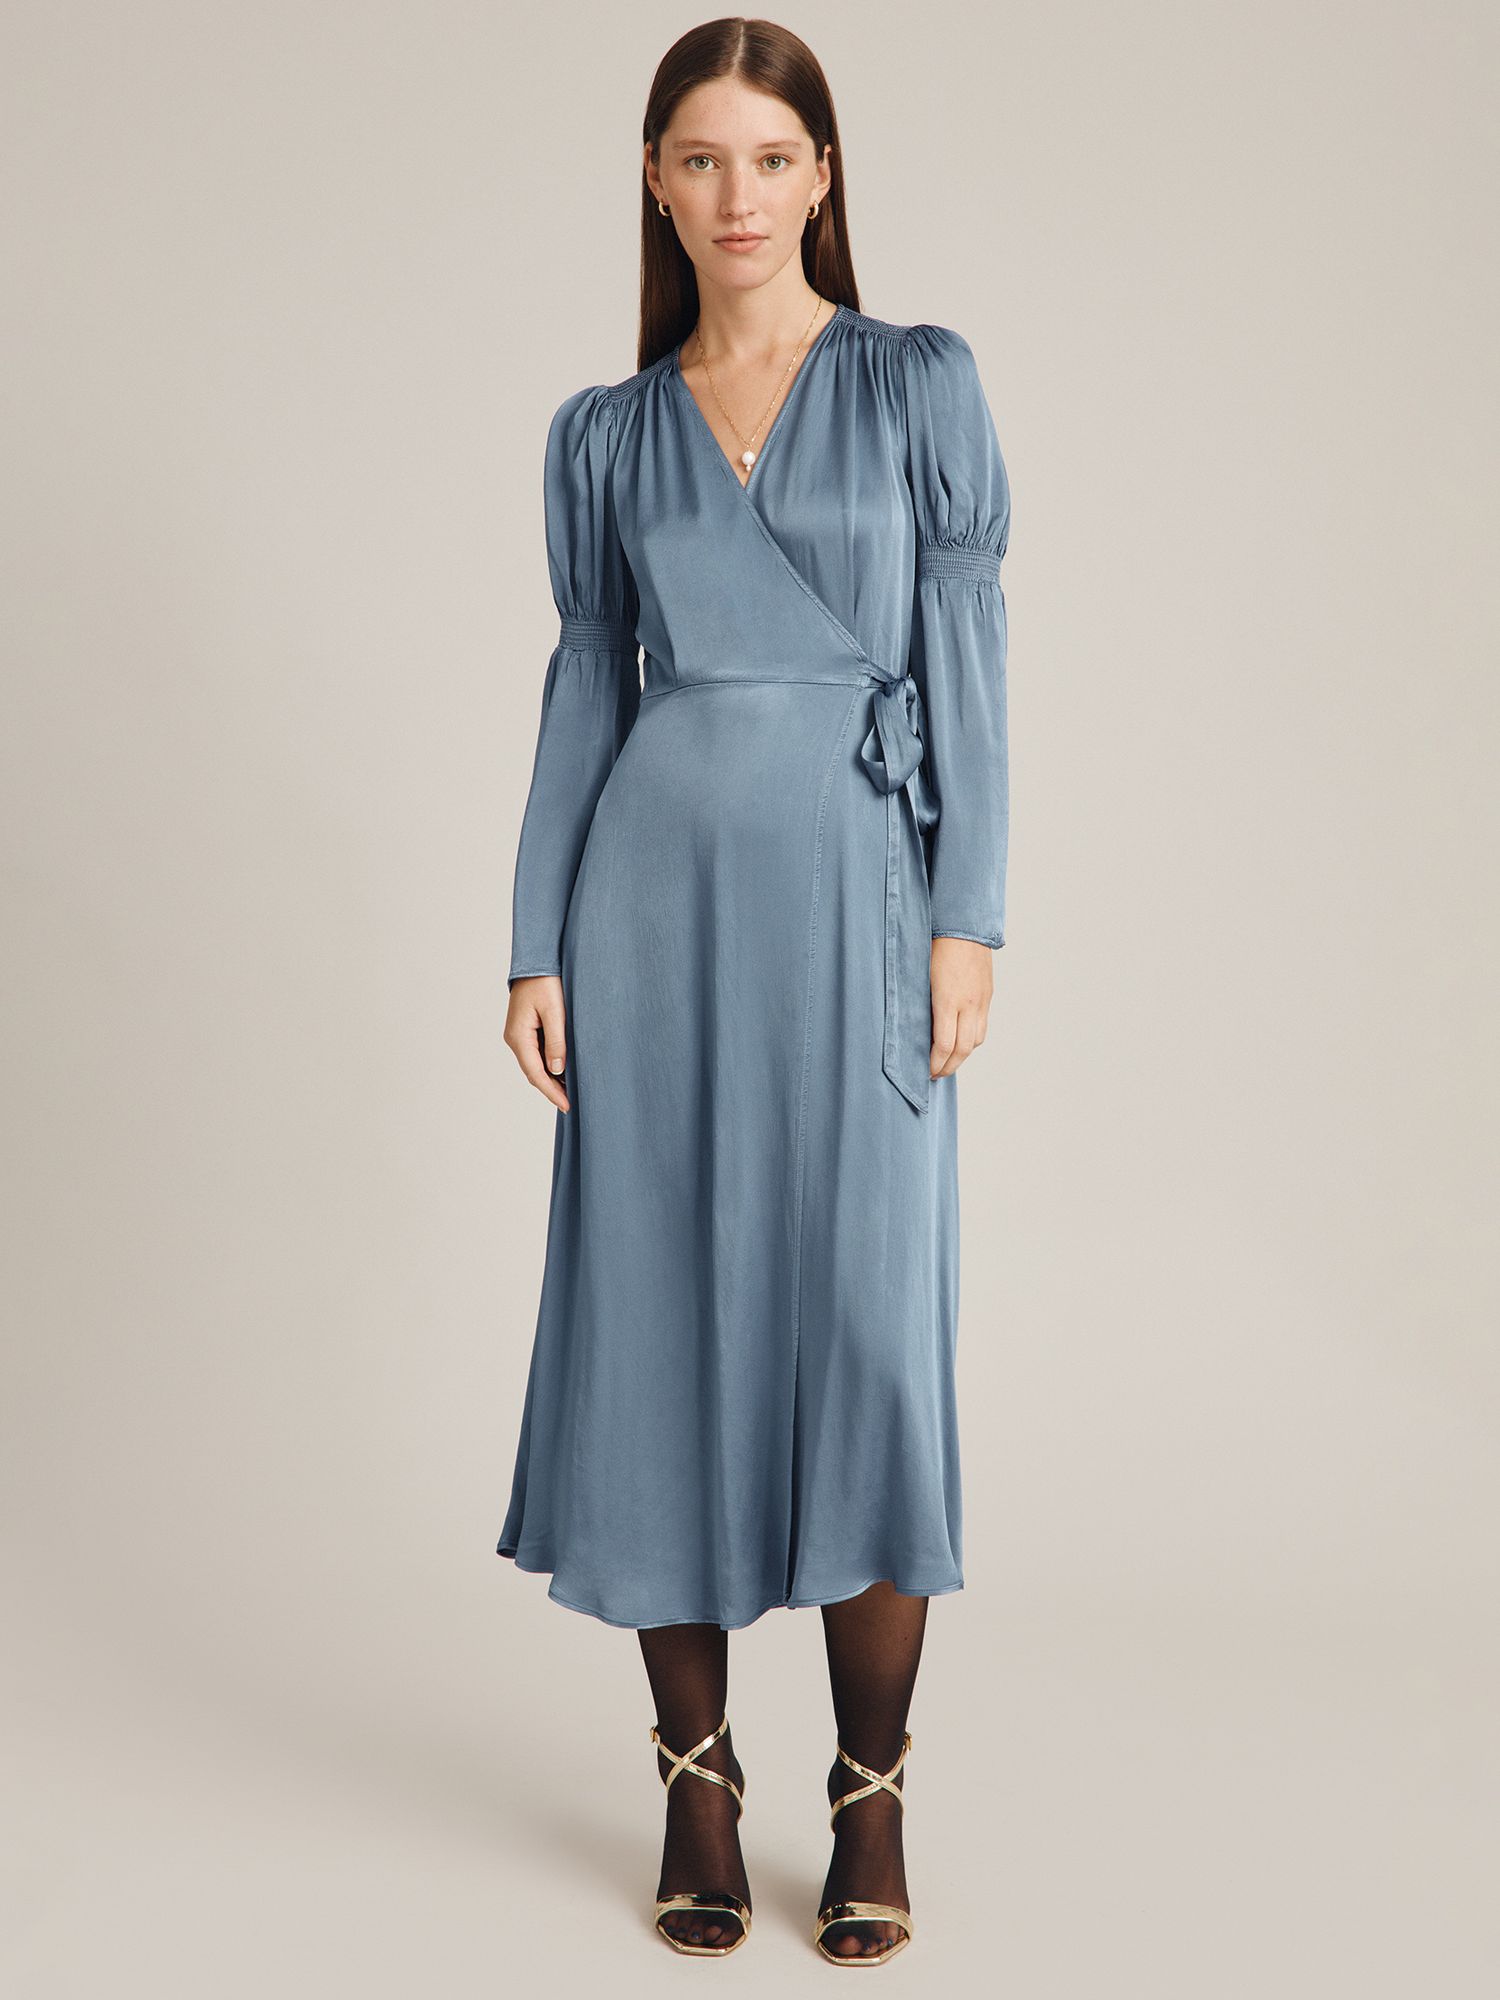 Ghost Maeve Satin Wrap Dress, Slate Blue at John Lewis & Partners